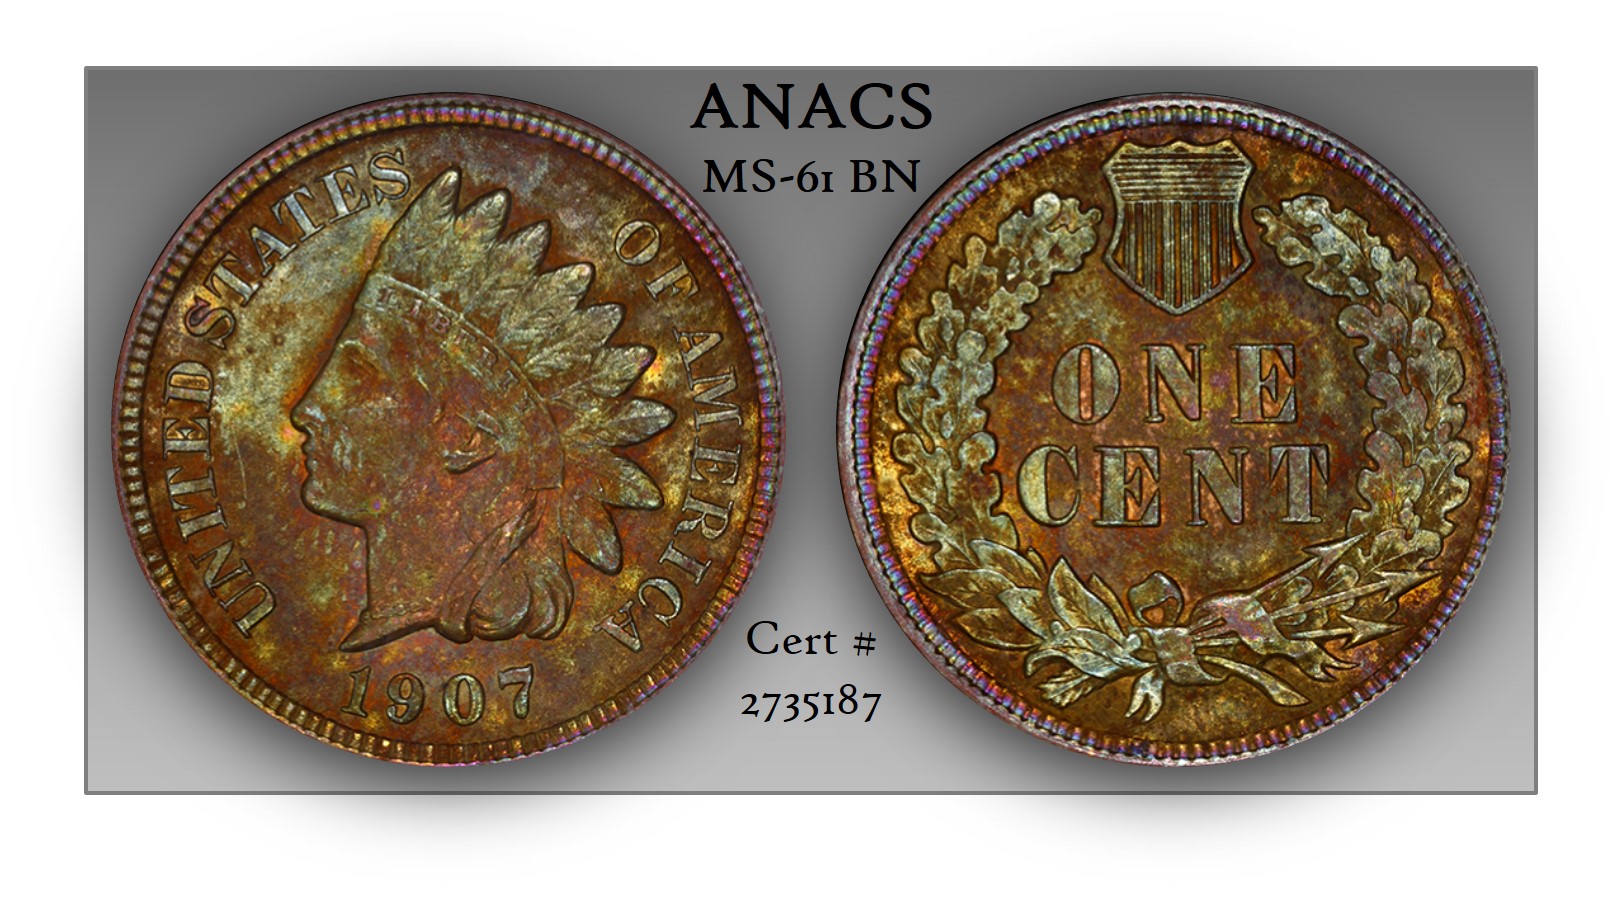 1907 Indian Head Cent FCC&C GCI Image.jpg